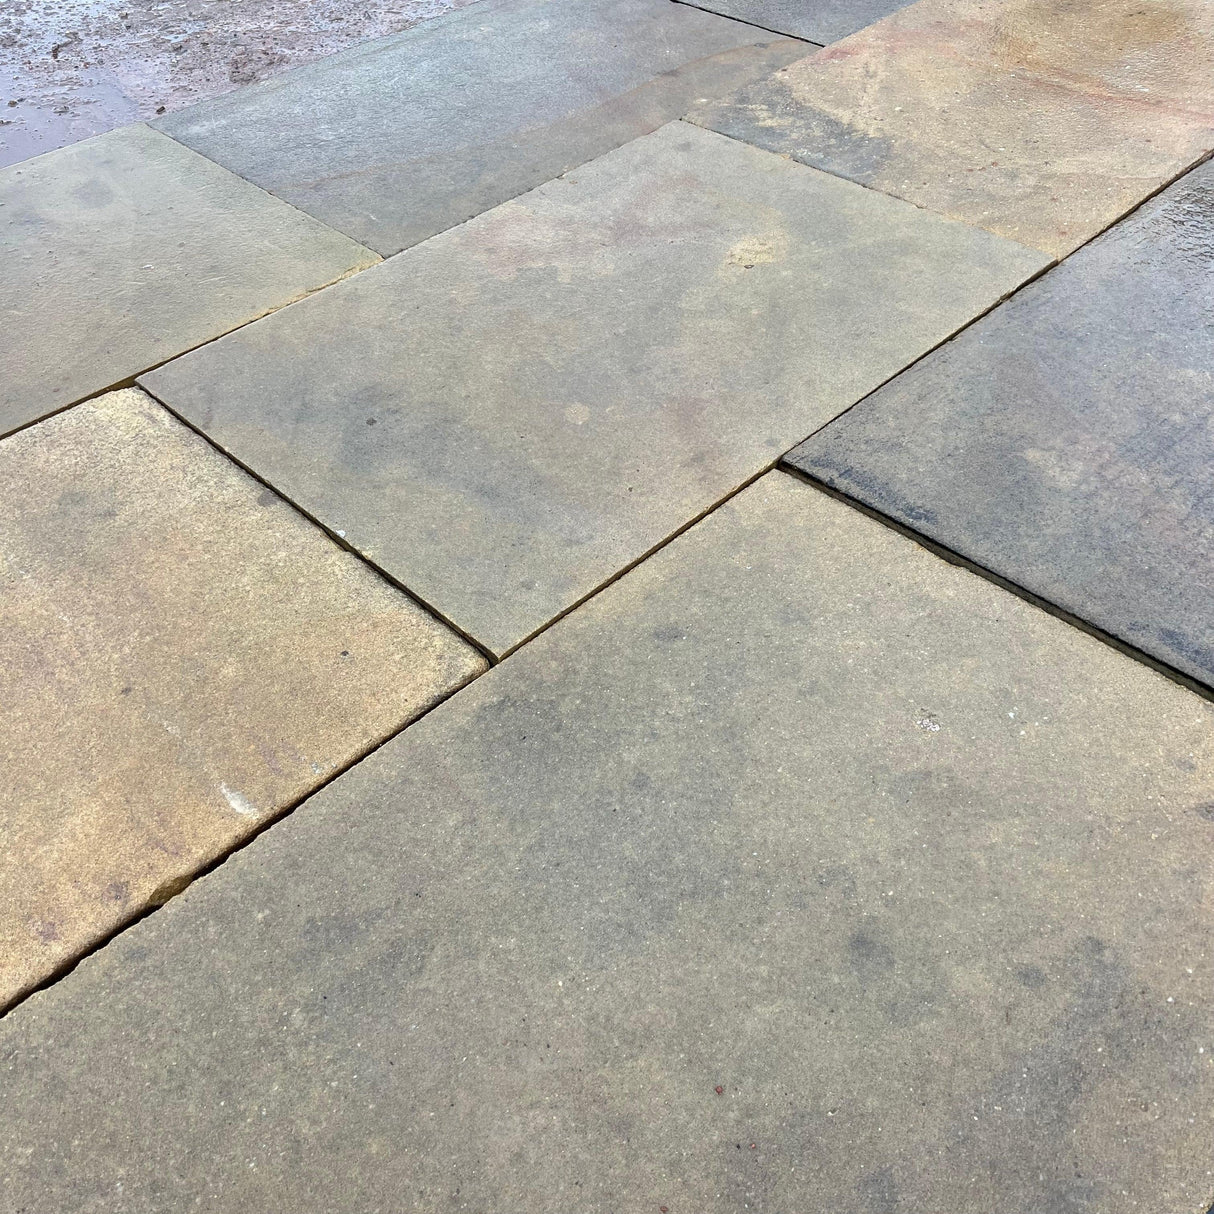 Reclaimed Sawn Yorkshire Sand Stone Paving Flag Stones - Reclaimed Brick Company